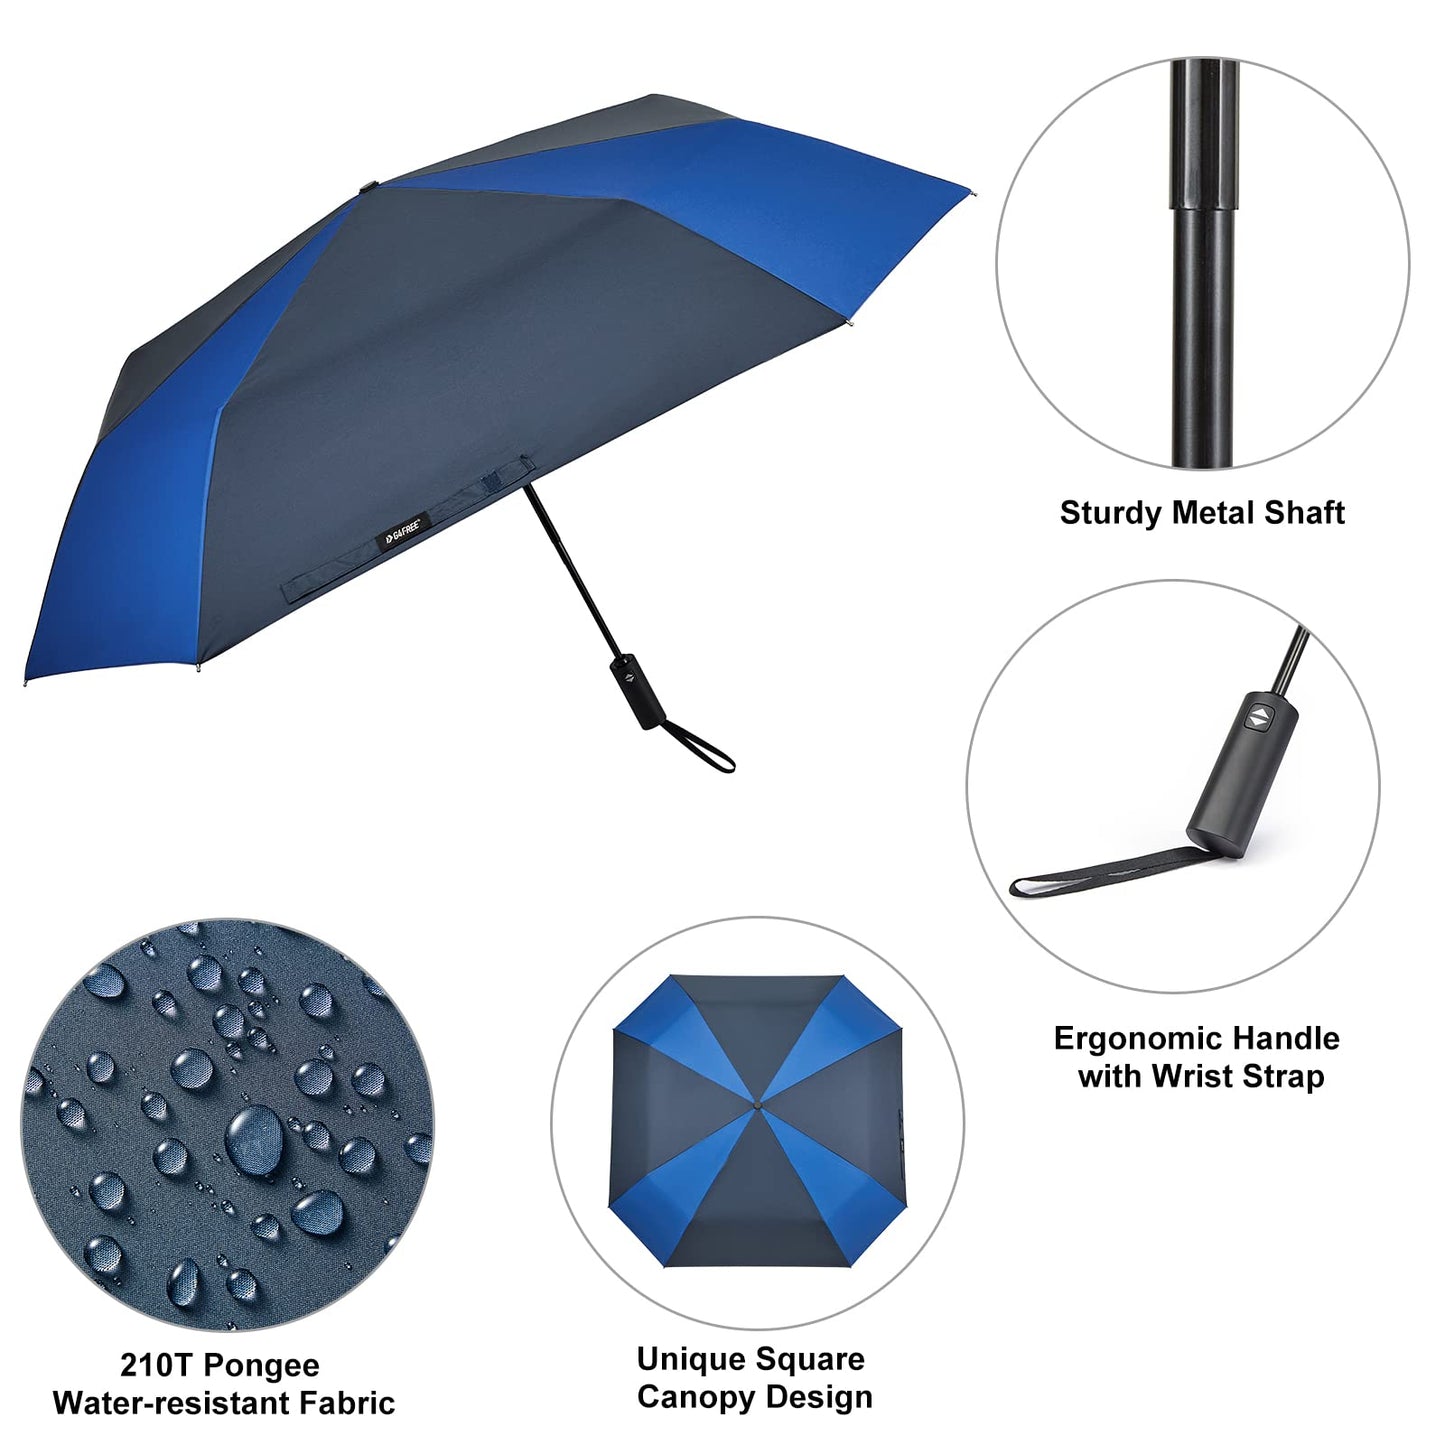 G4Free 54 Inch Large Golf Umbrella